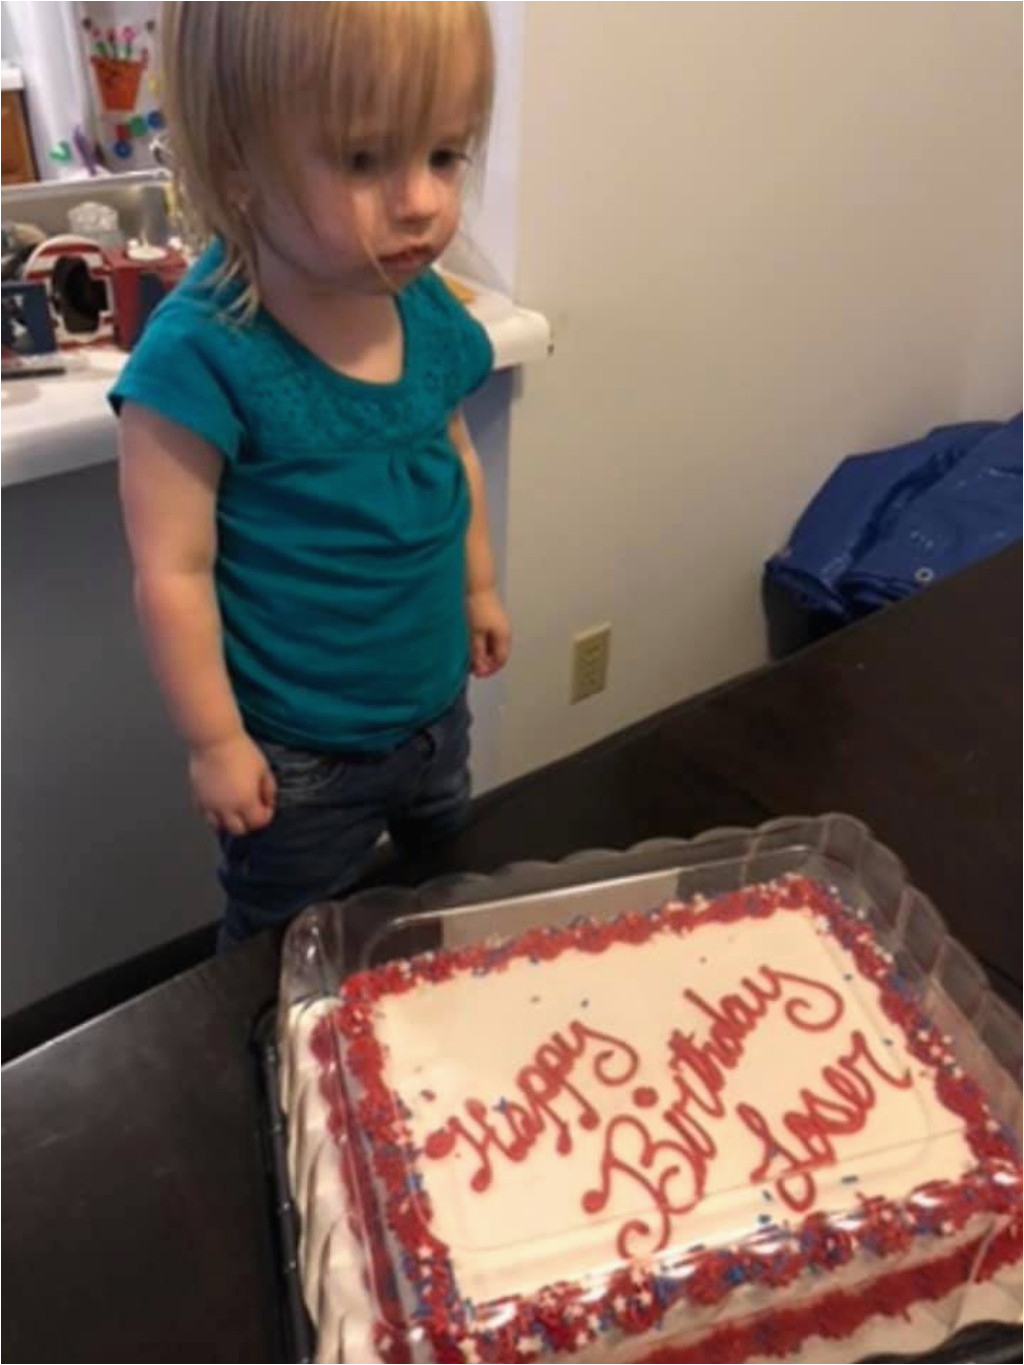 happy birthday loser birthday cake toddler goes viral